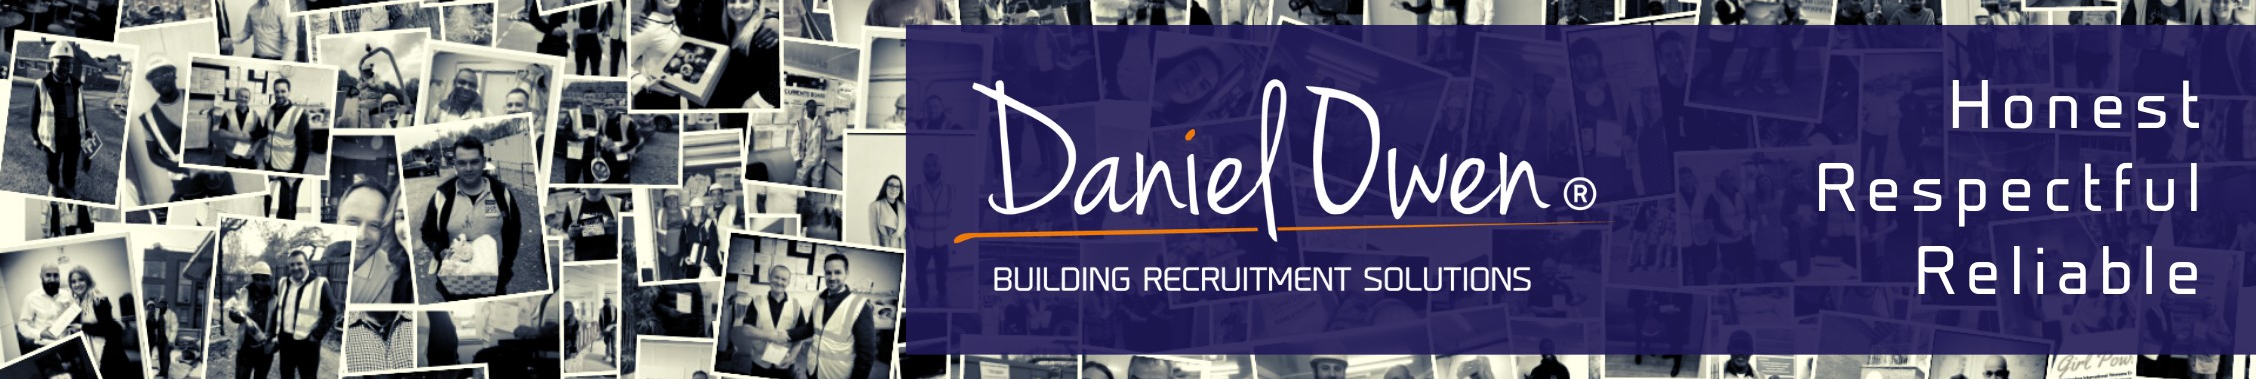 Daniel Owen Ltd. background